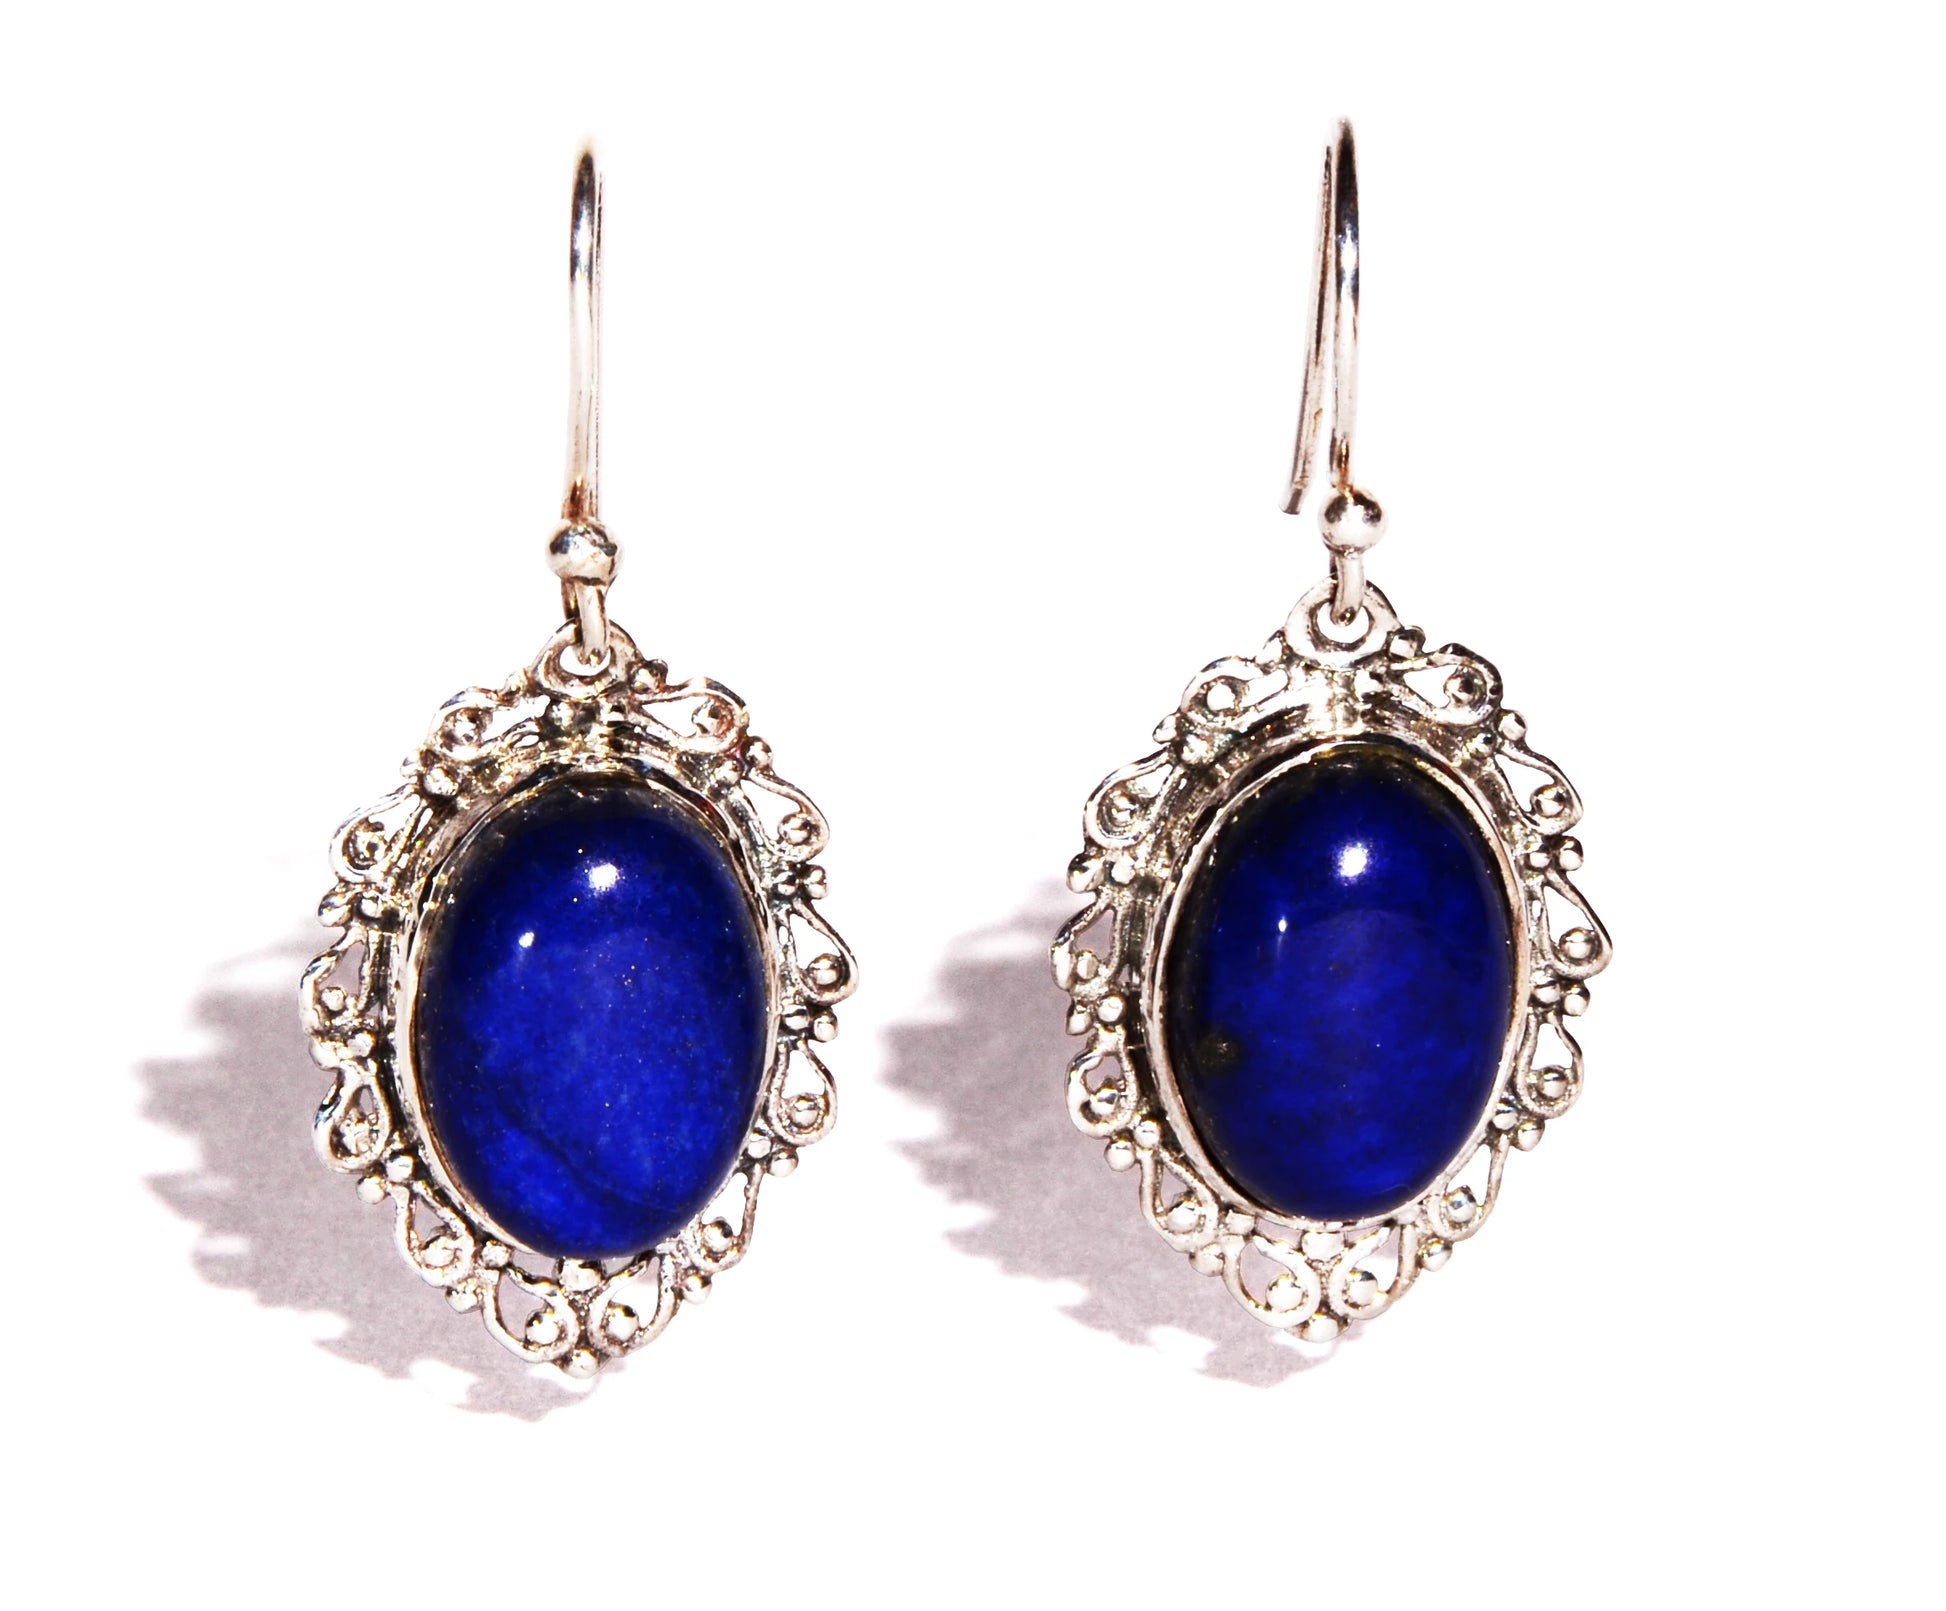 Lapis Lazuli Sterling Silver Earrings - Oval - Polished